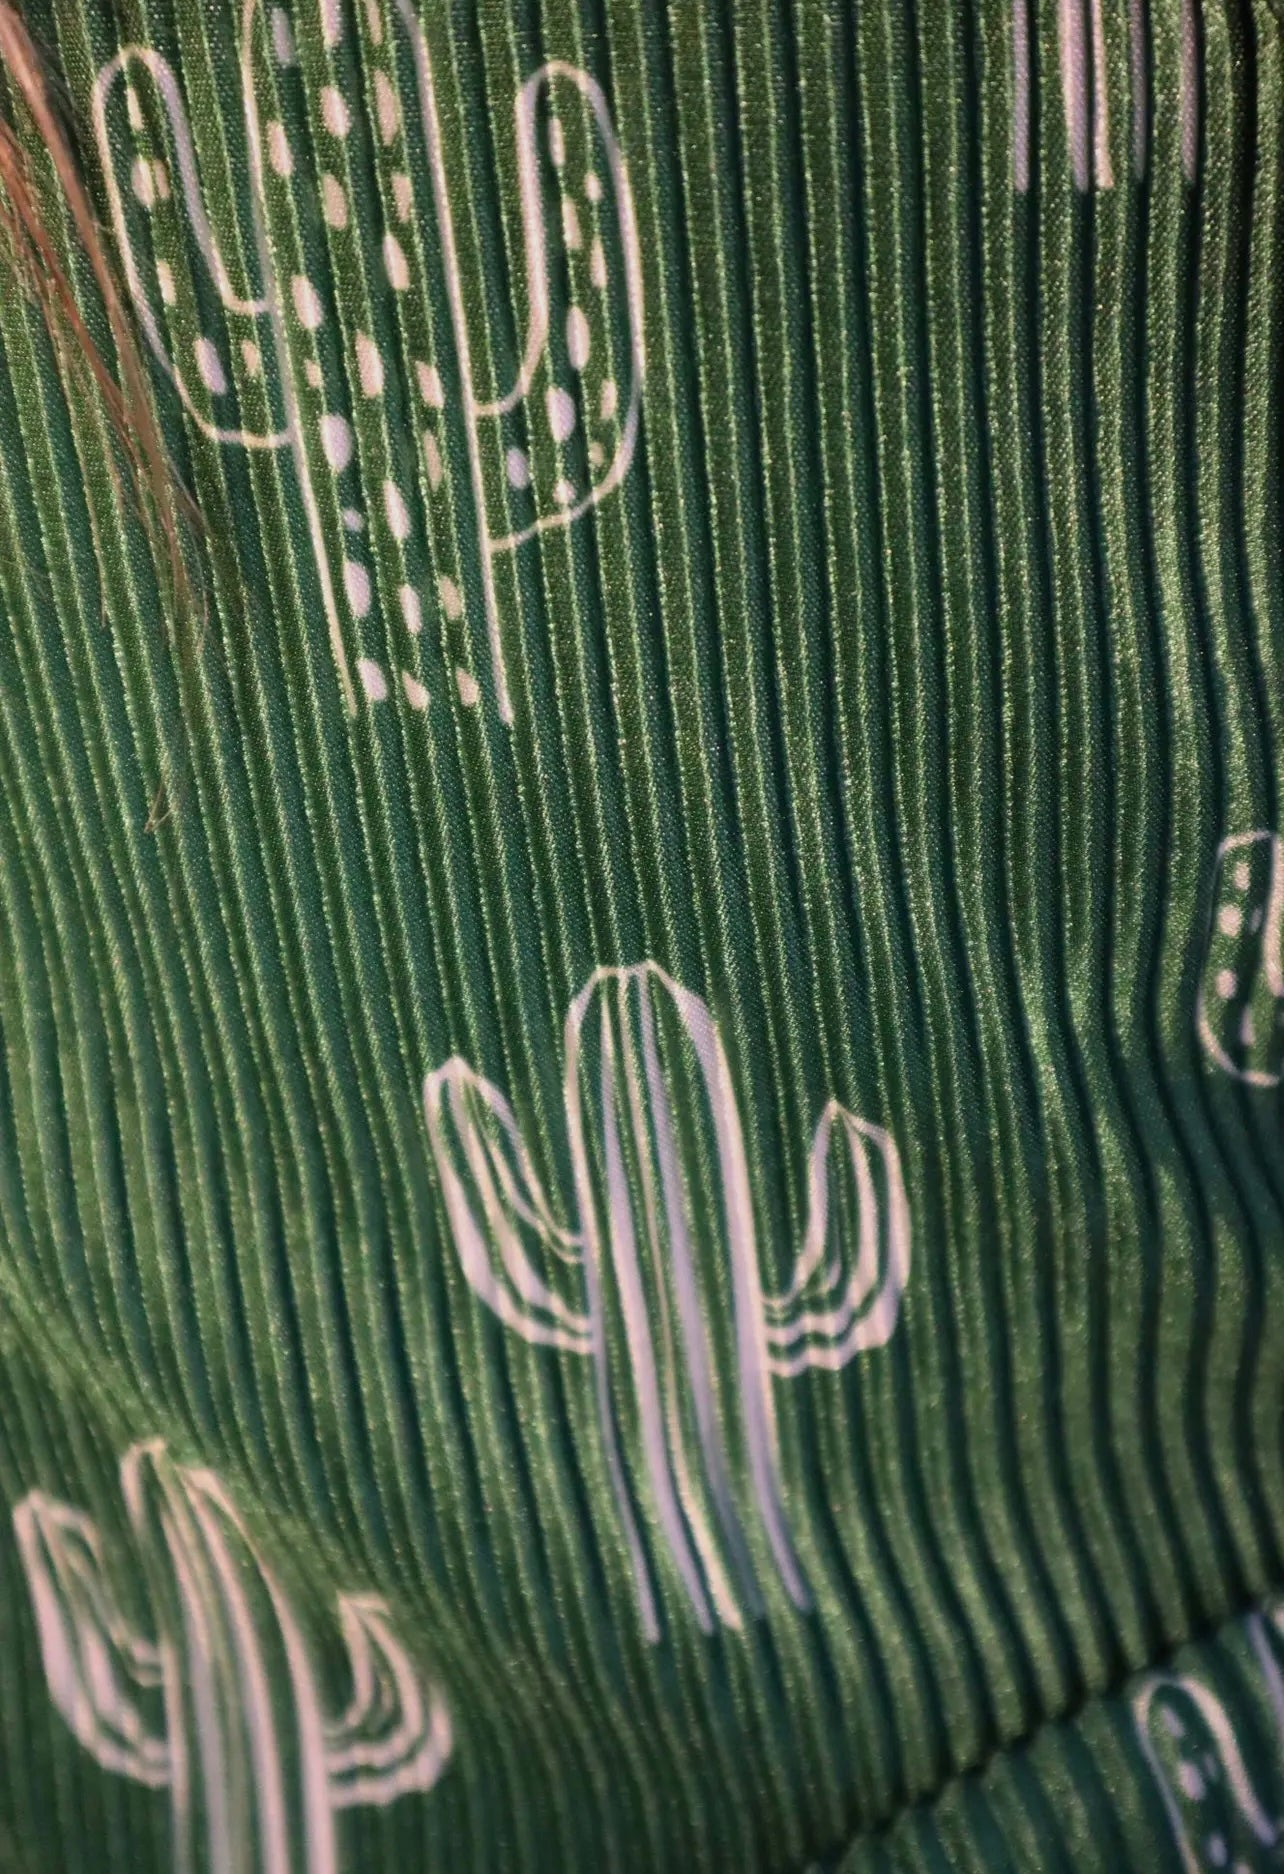 Dally Jane Press Pleated Short Set
- Green Cactus